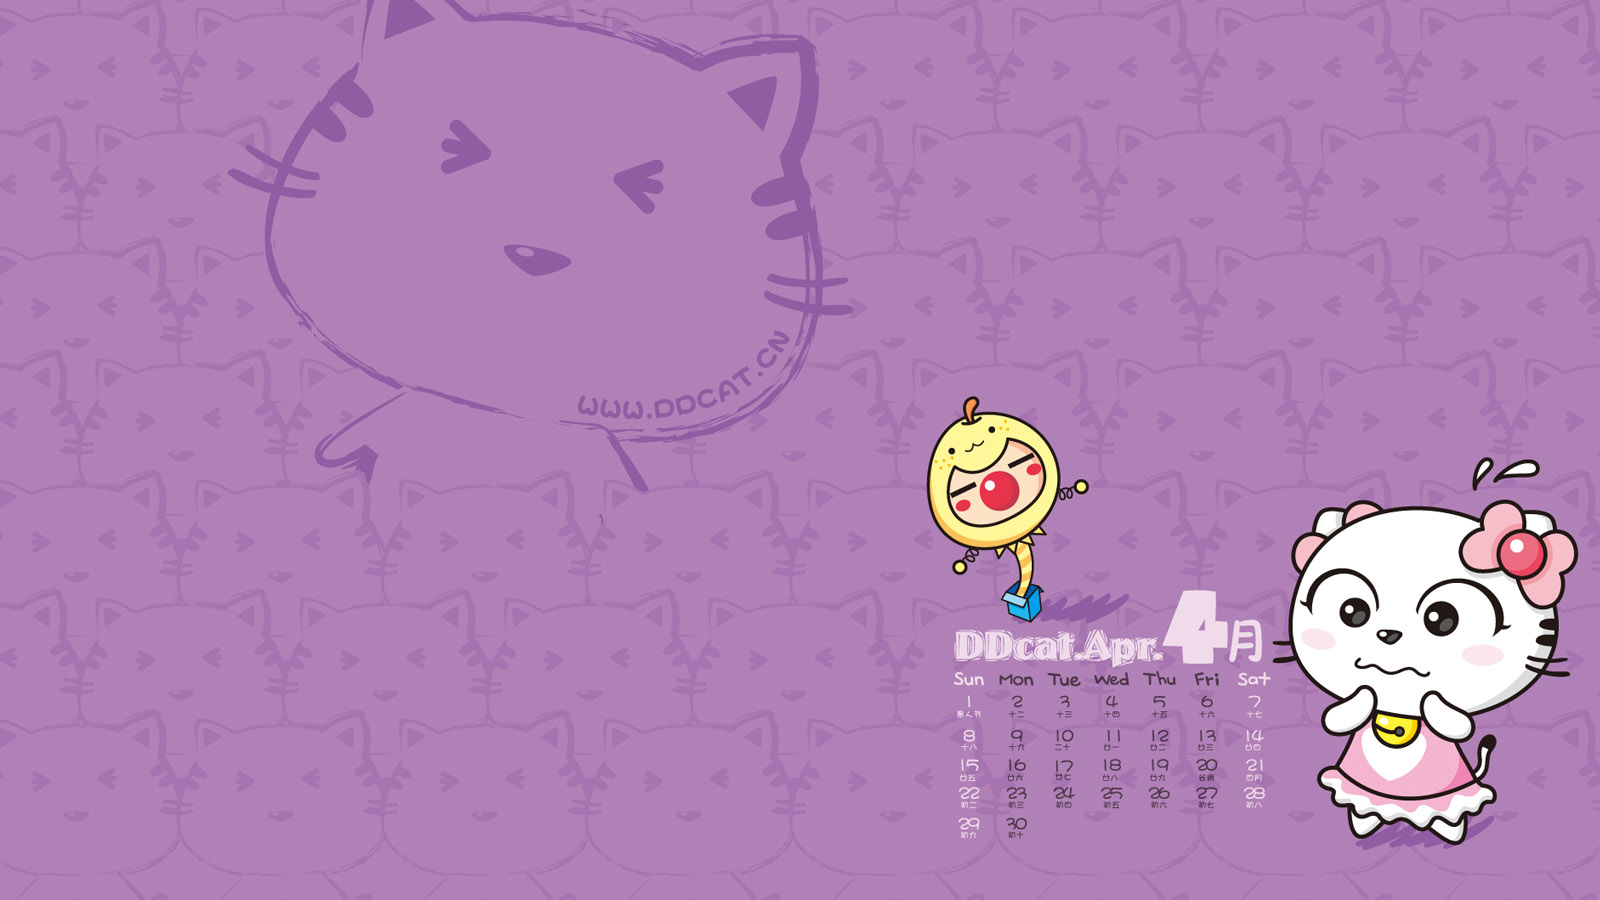 Ding Dong cat April 2012 calendar wallpaper